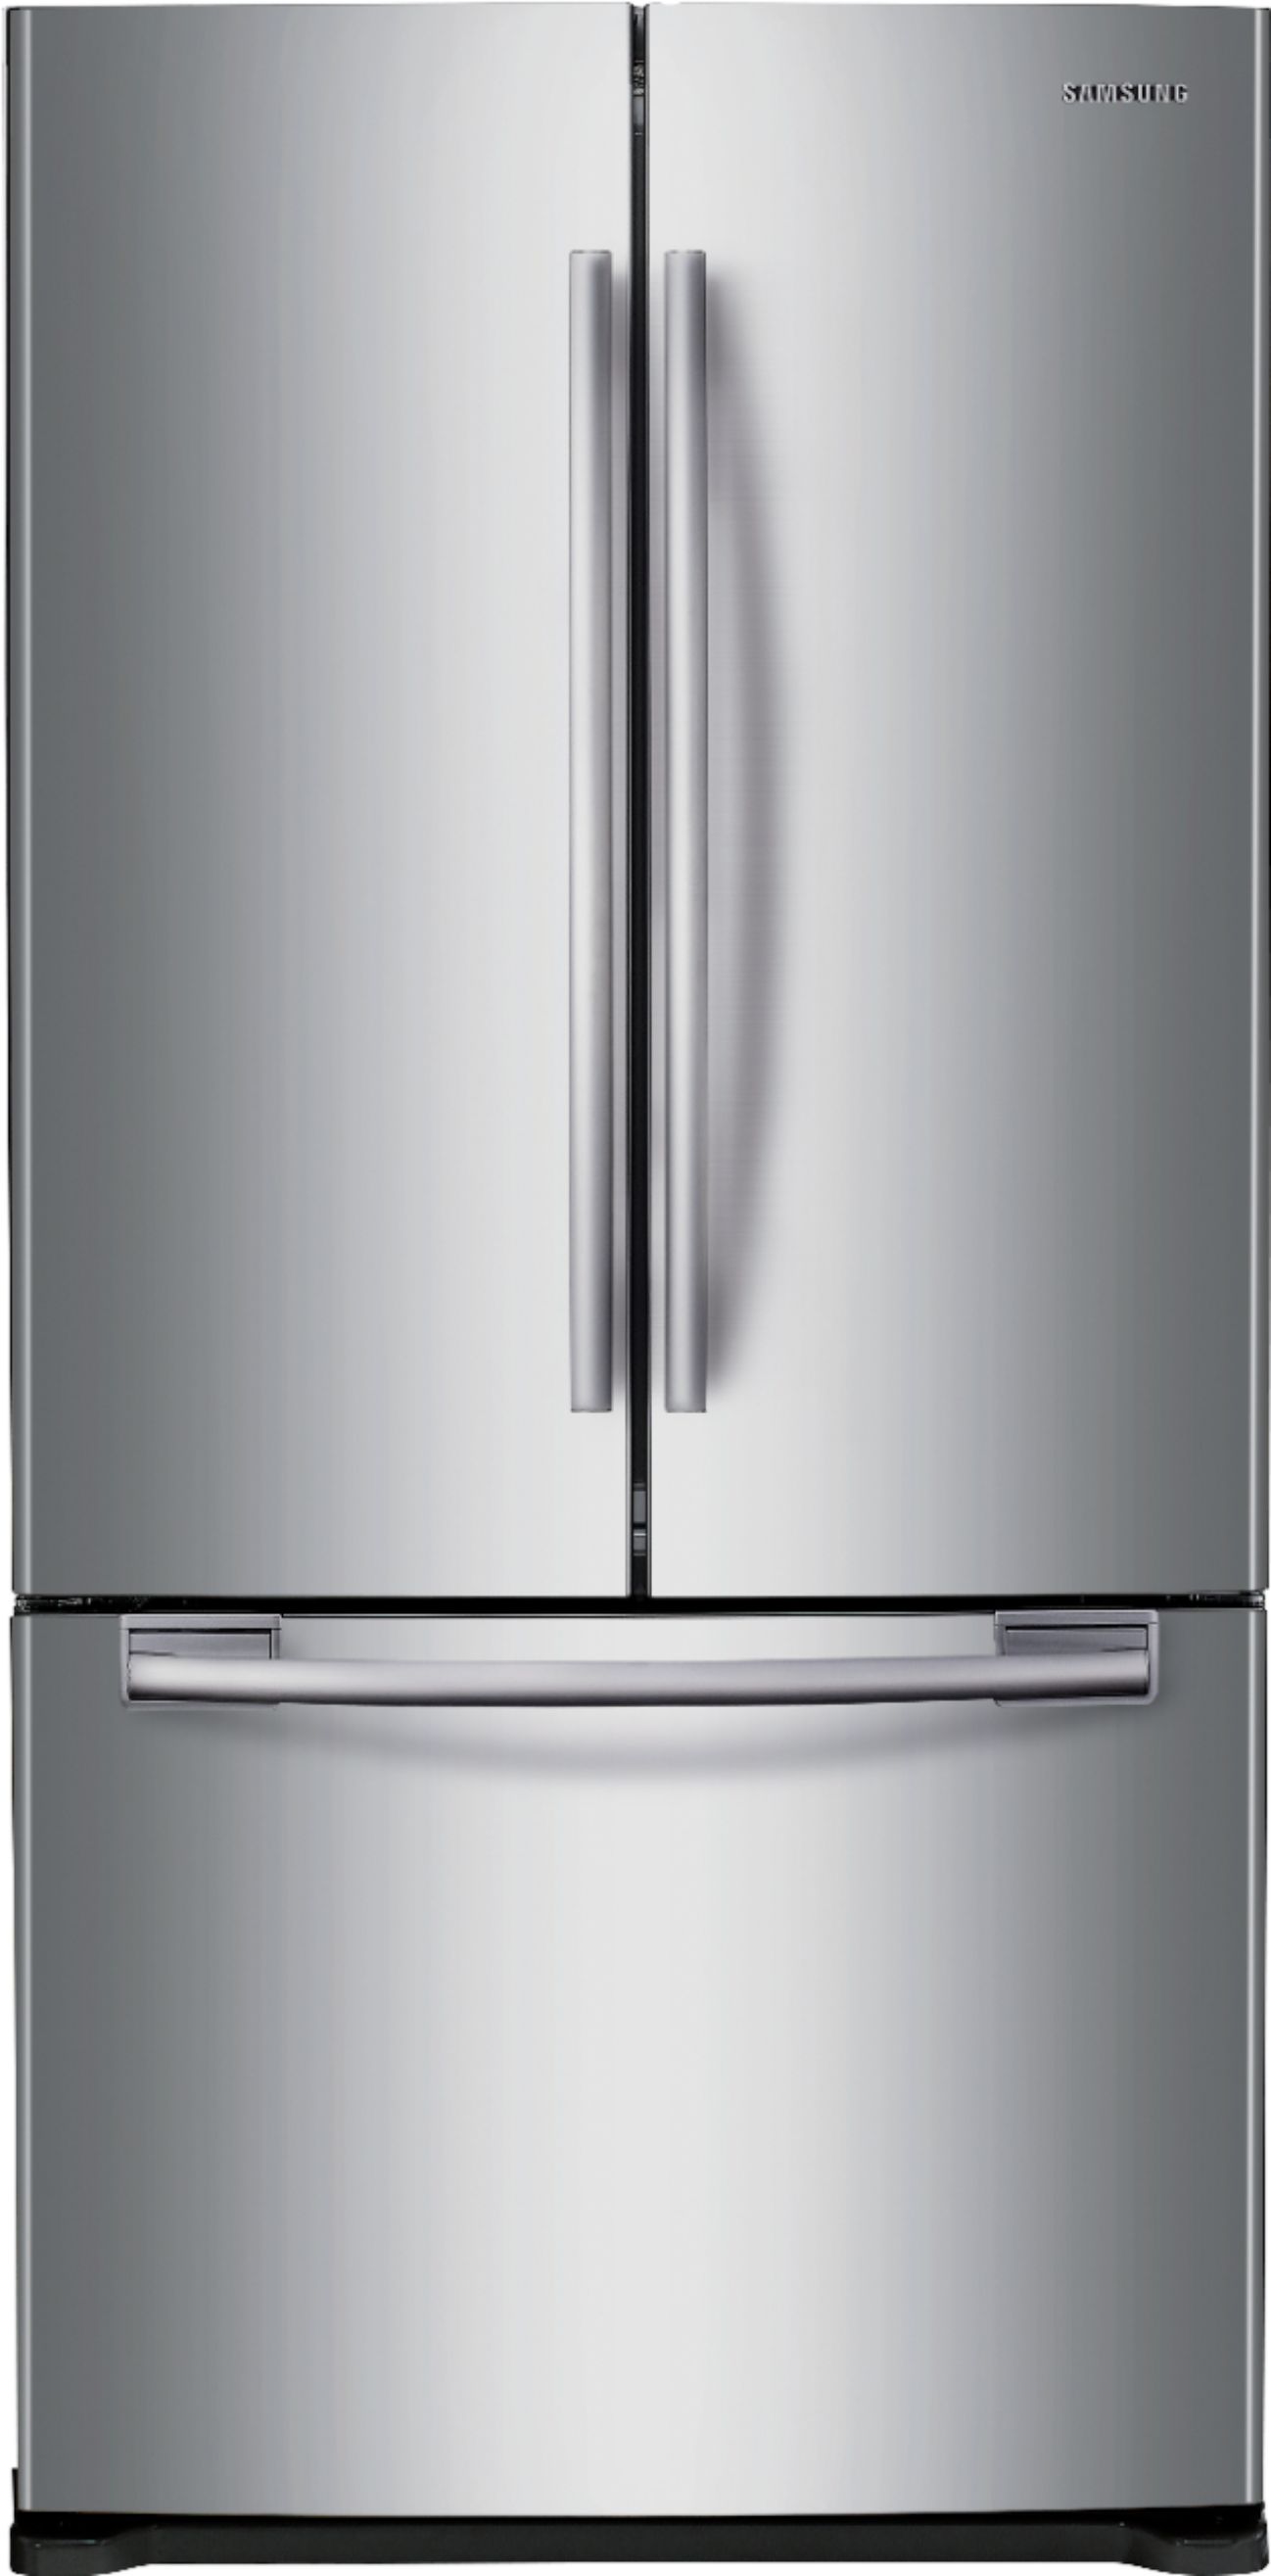 Samsung 17 5 Cu Ft French Door Counter Depth Refrigerator